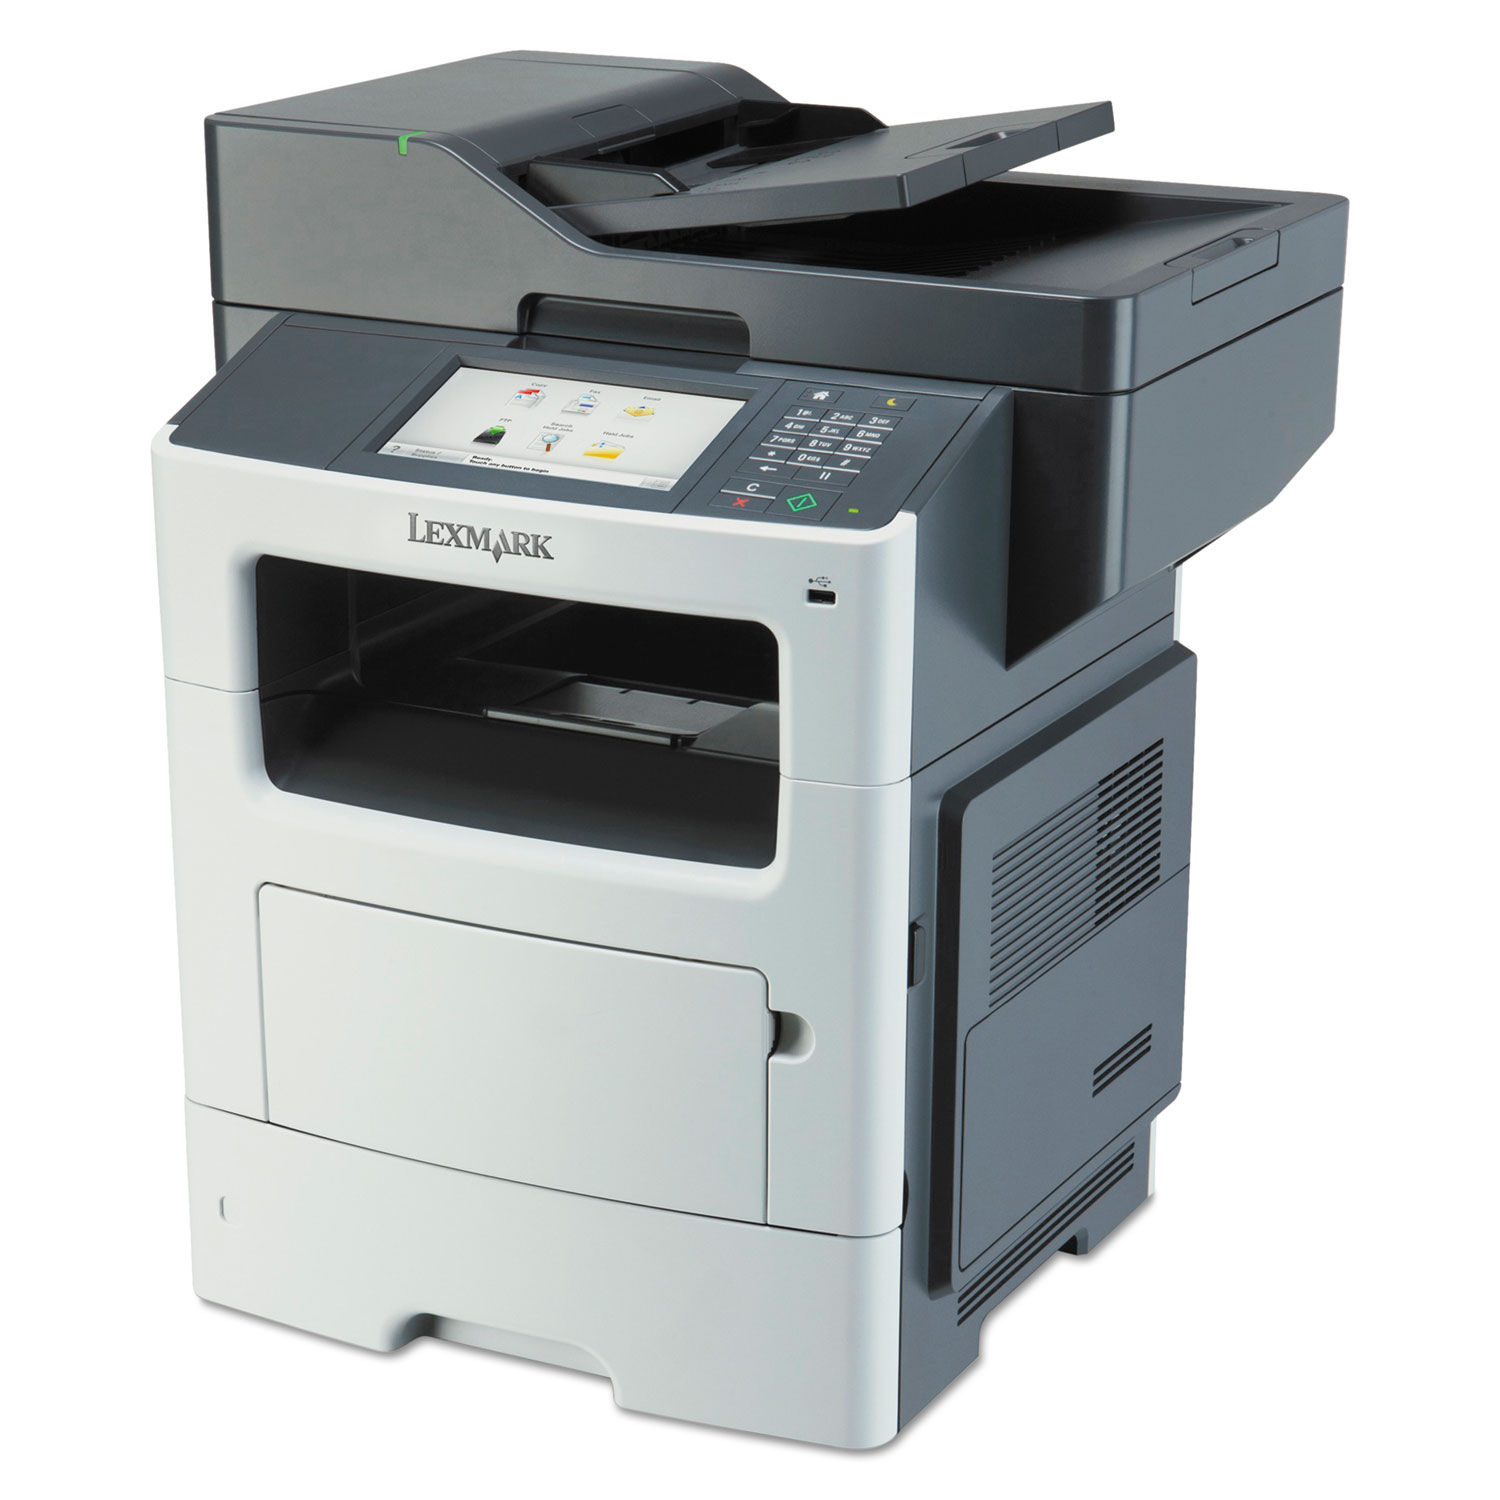 MX611dhe Multifunction Laser Printer, Copy/Fax/Print/Scan